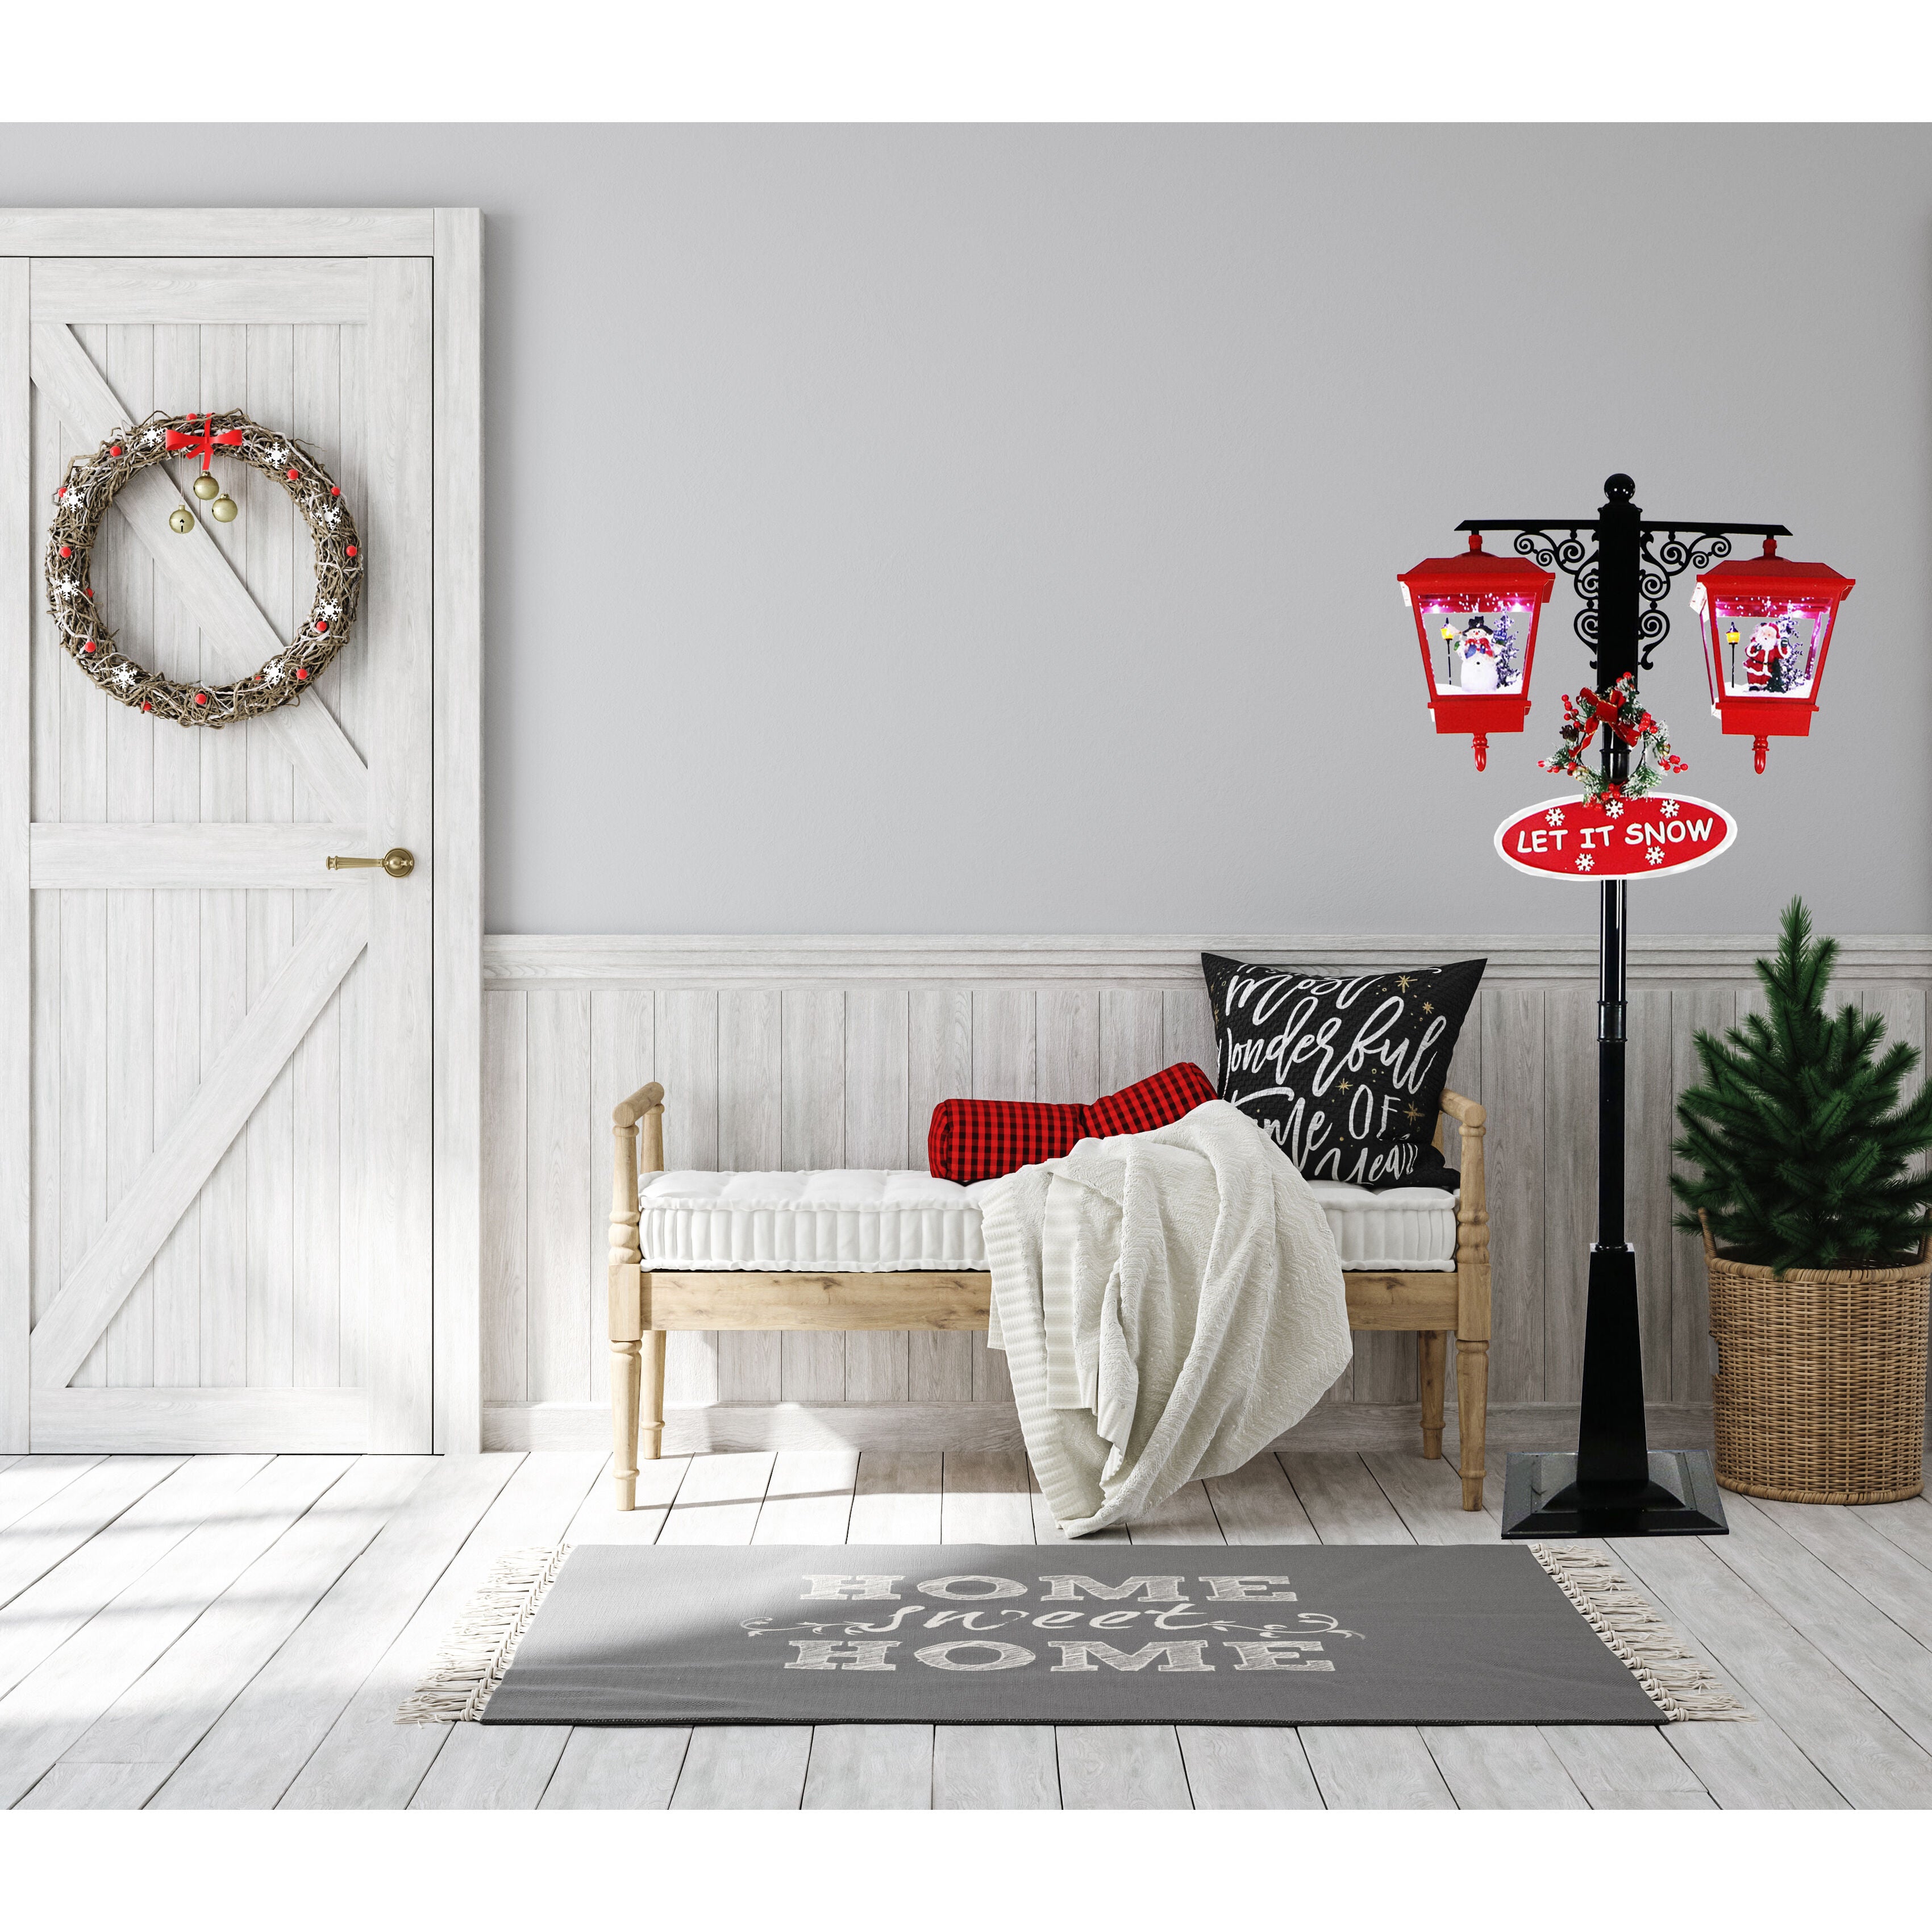 Fraser Hill Farm -  Let It Snow Series 71-In. Dual-Lantern Street Lamp w/ Santa, Snowman, 1 Sign, Cascading Snow, Christmas Music, Red/Black